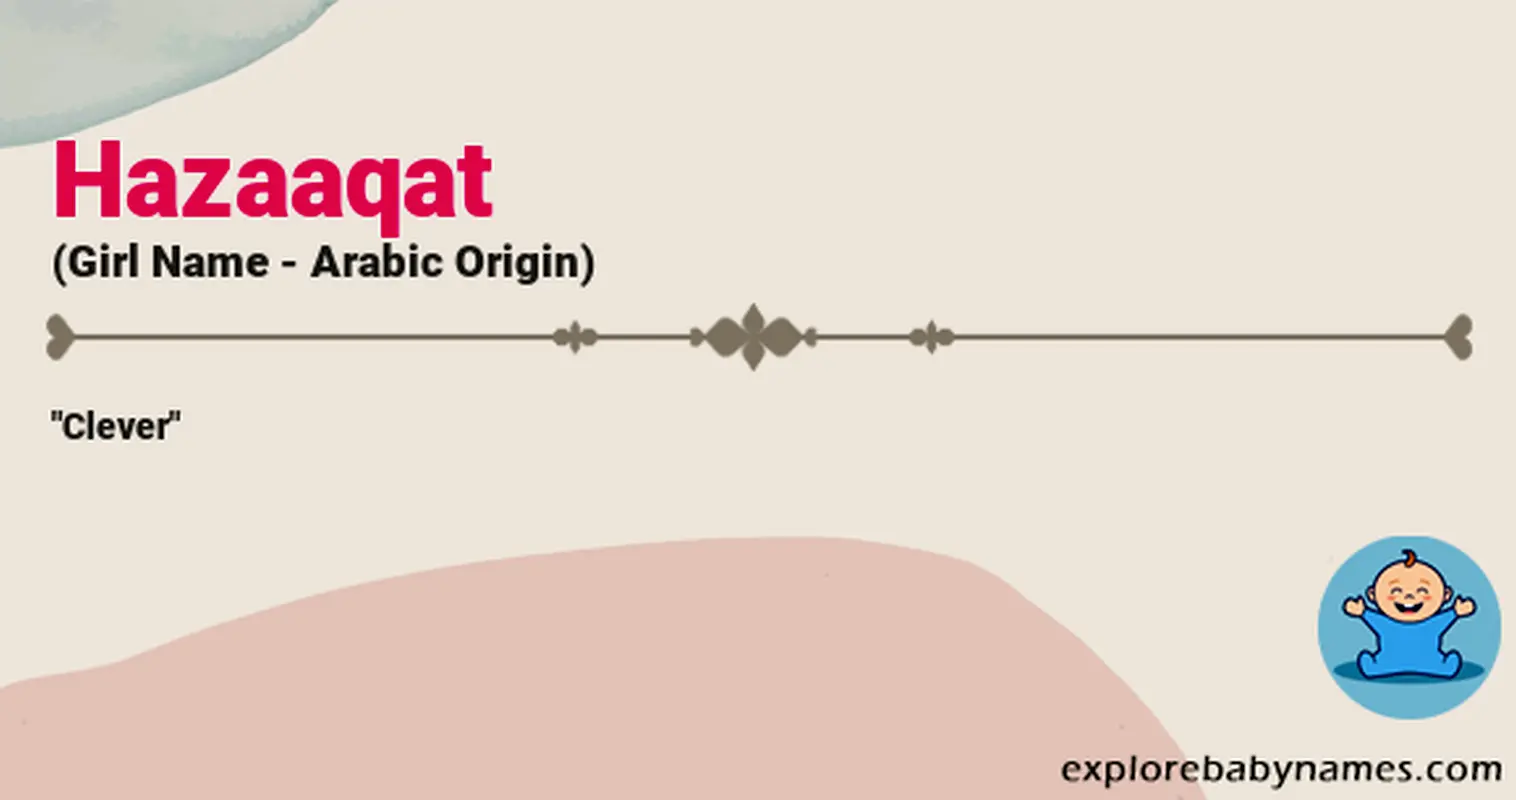 Meaning of Hazaaqat